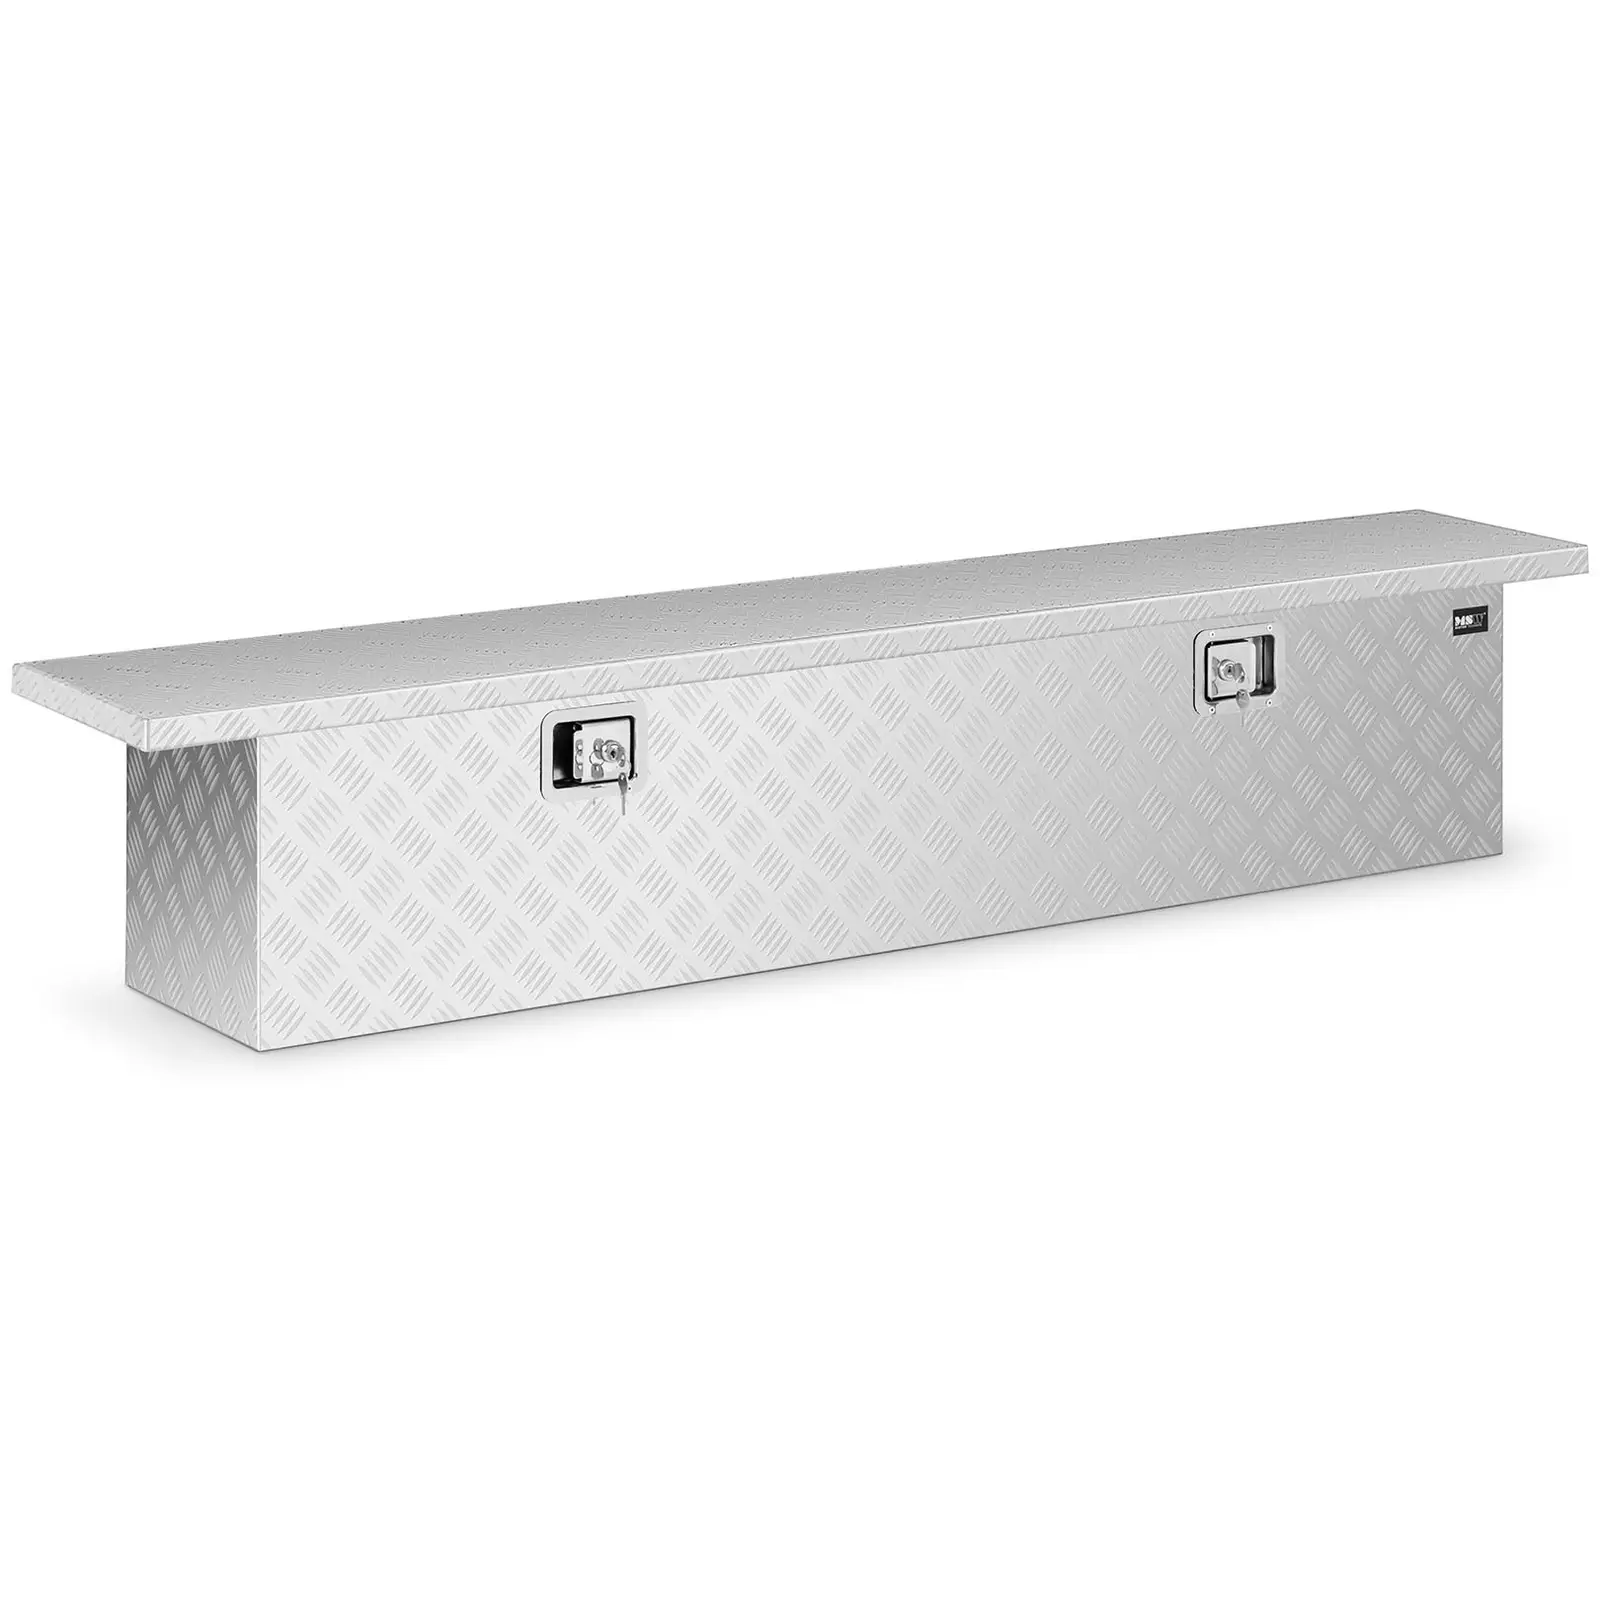 Aluminium Tool Box - checker plate - 175 x 30 x 35 cm - 180 L - lockable